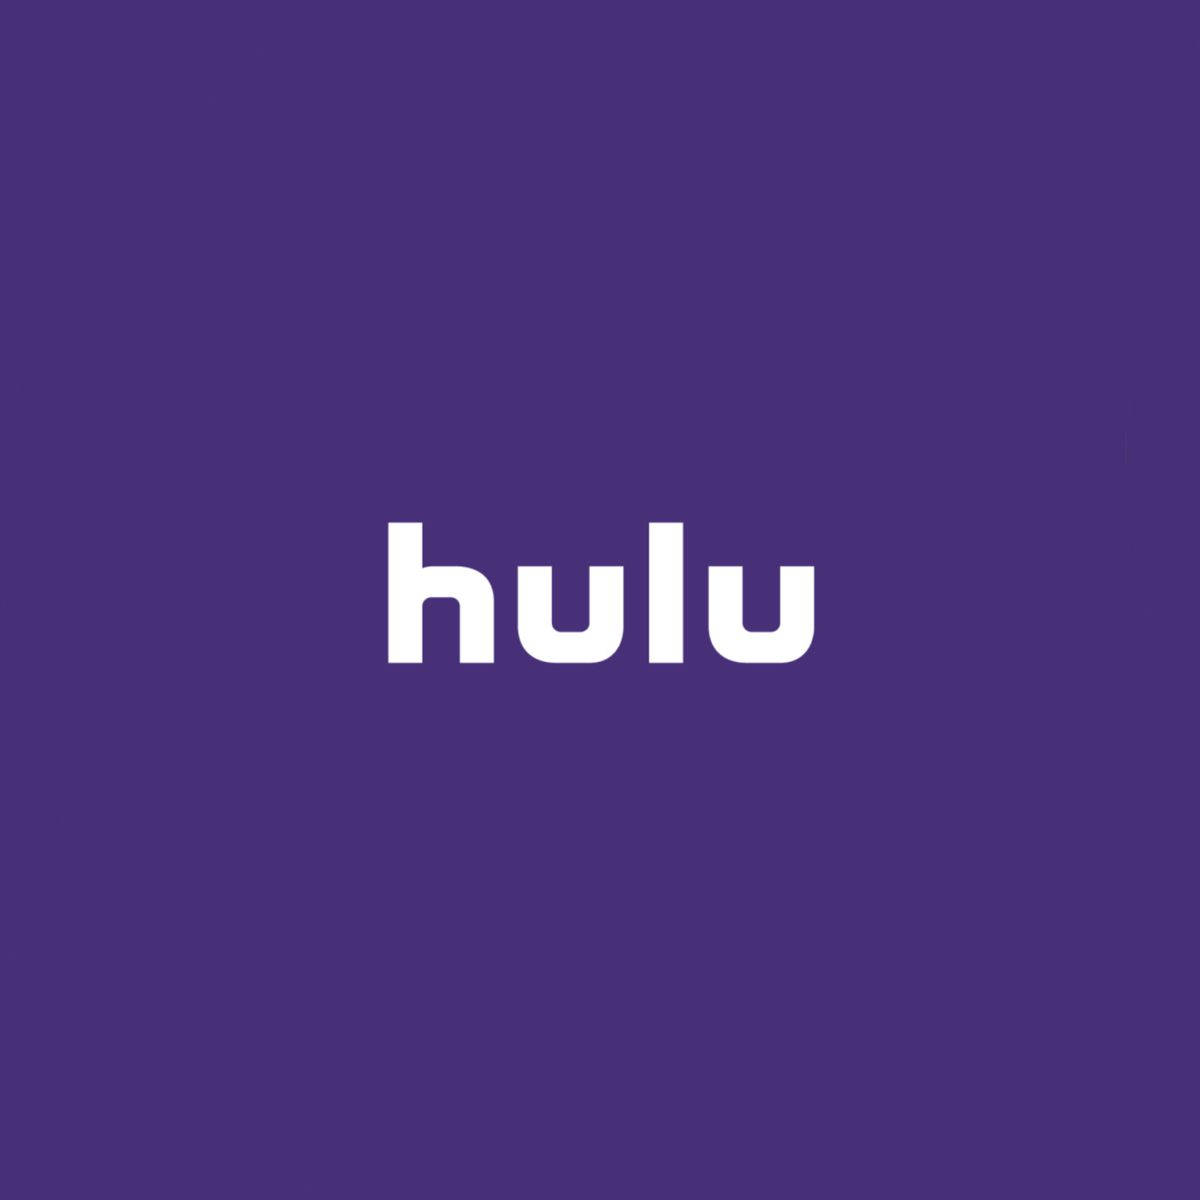 Hulu Violet Aesthetic Wallpaper